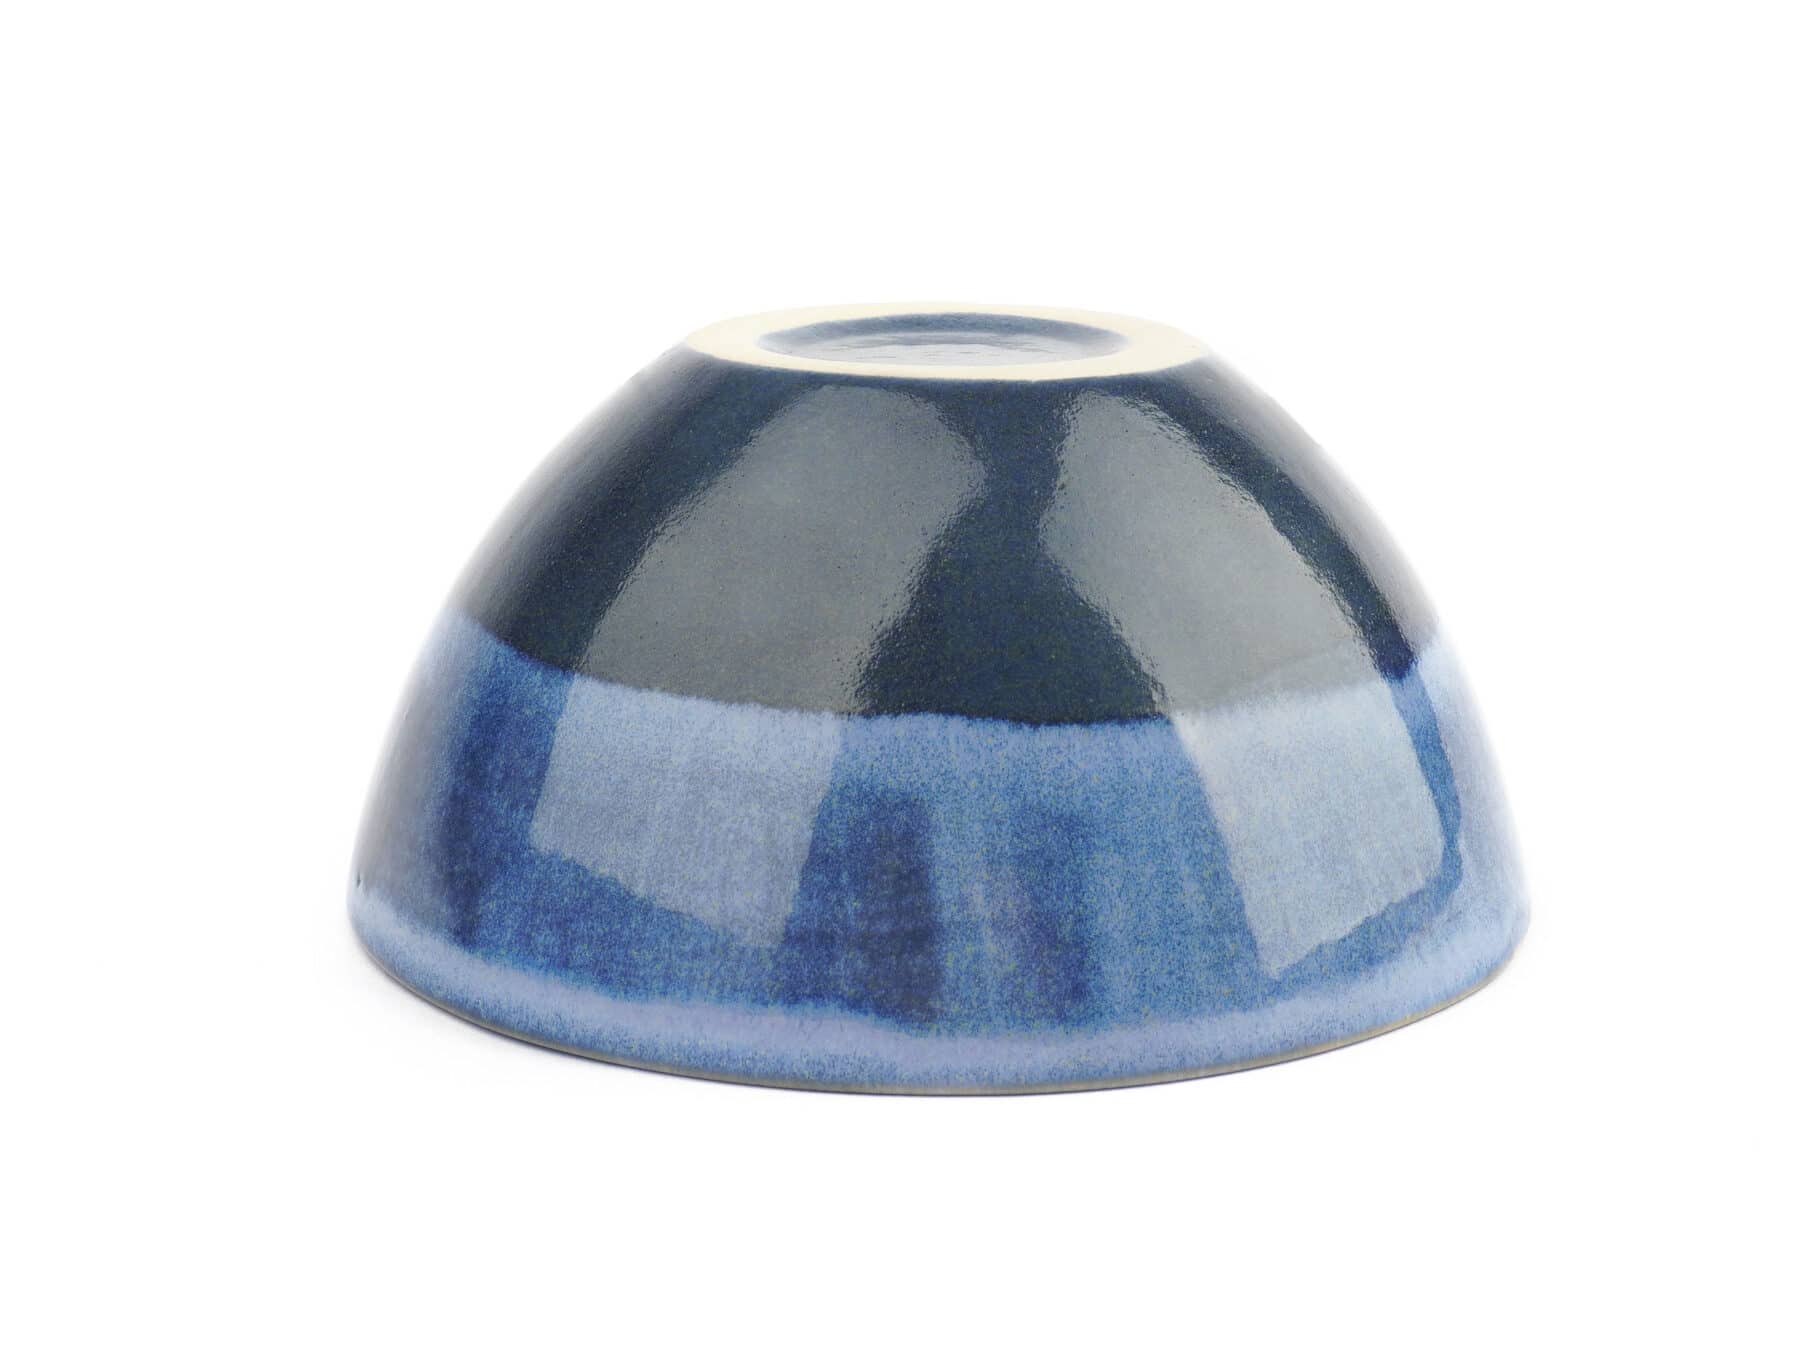 Mueslischale Schale Bowl Blaue Stunde Keramik swiss made